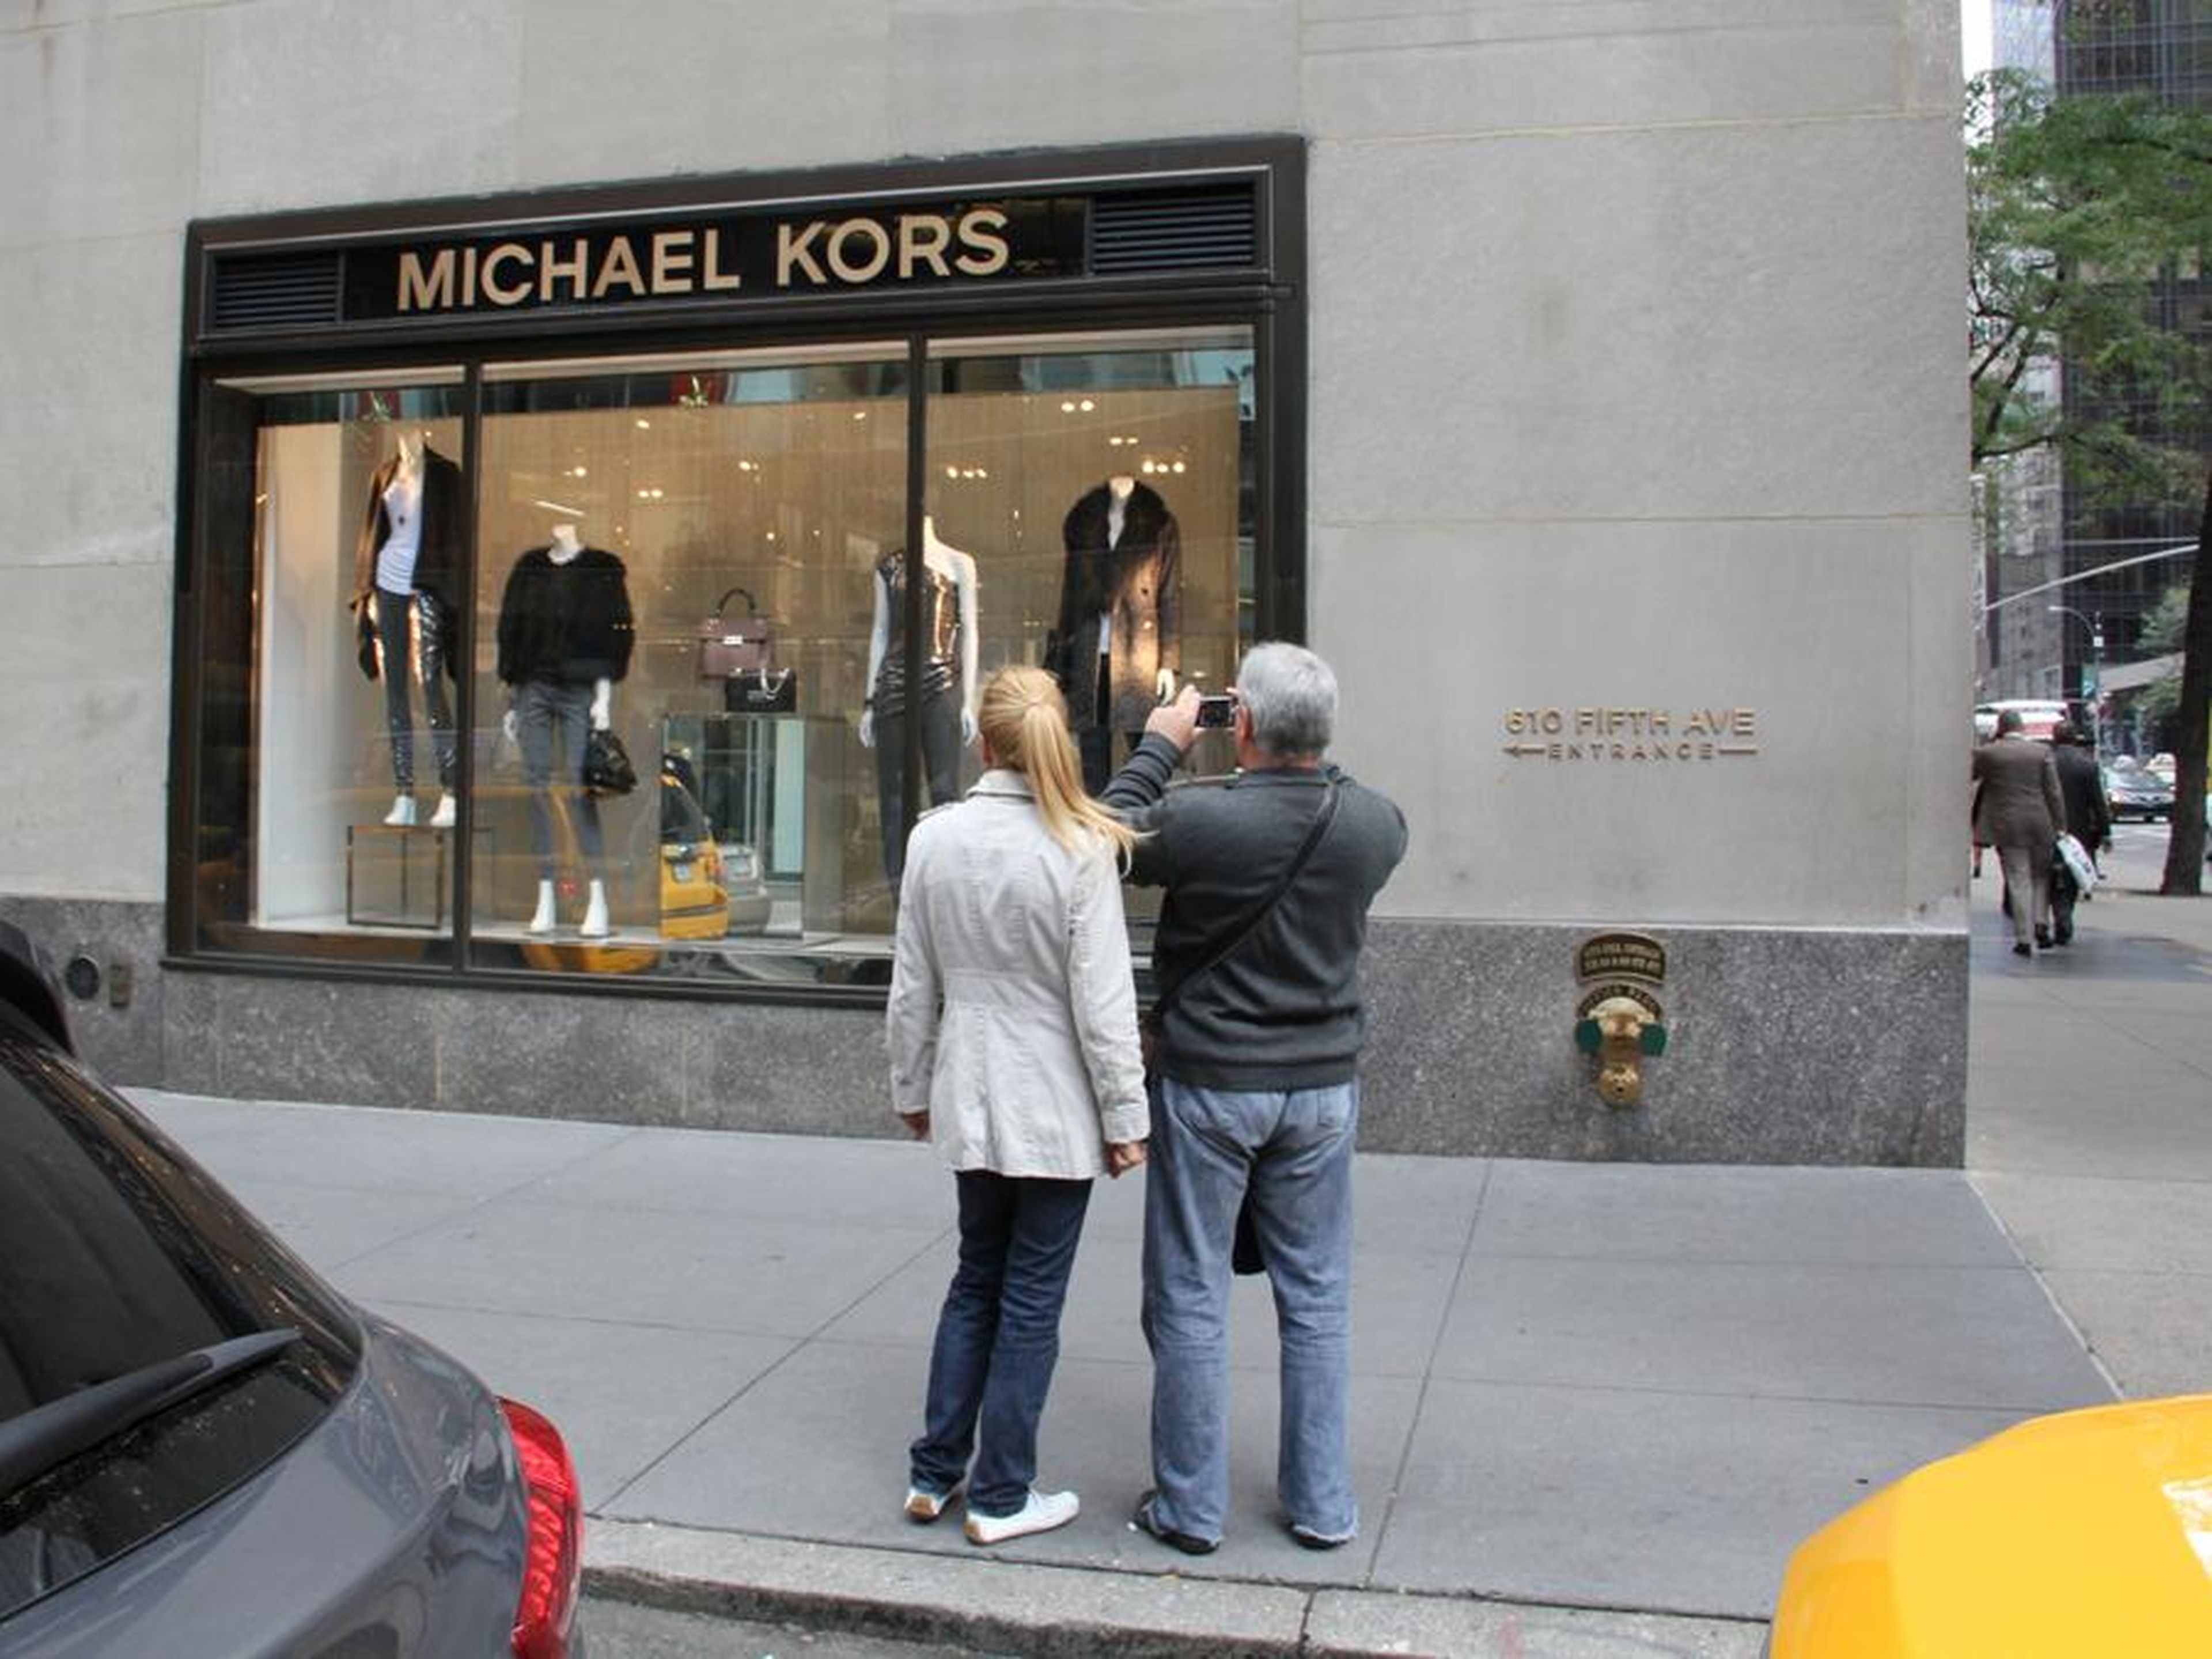 Fotos: Historia de cómo Michael Kors se convirtió en empresa de éxito |  Business Insider España